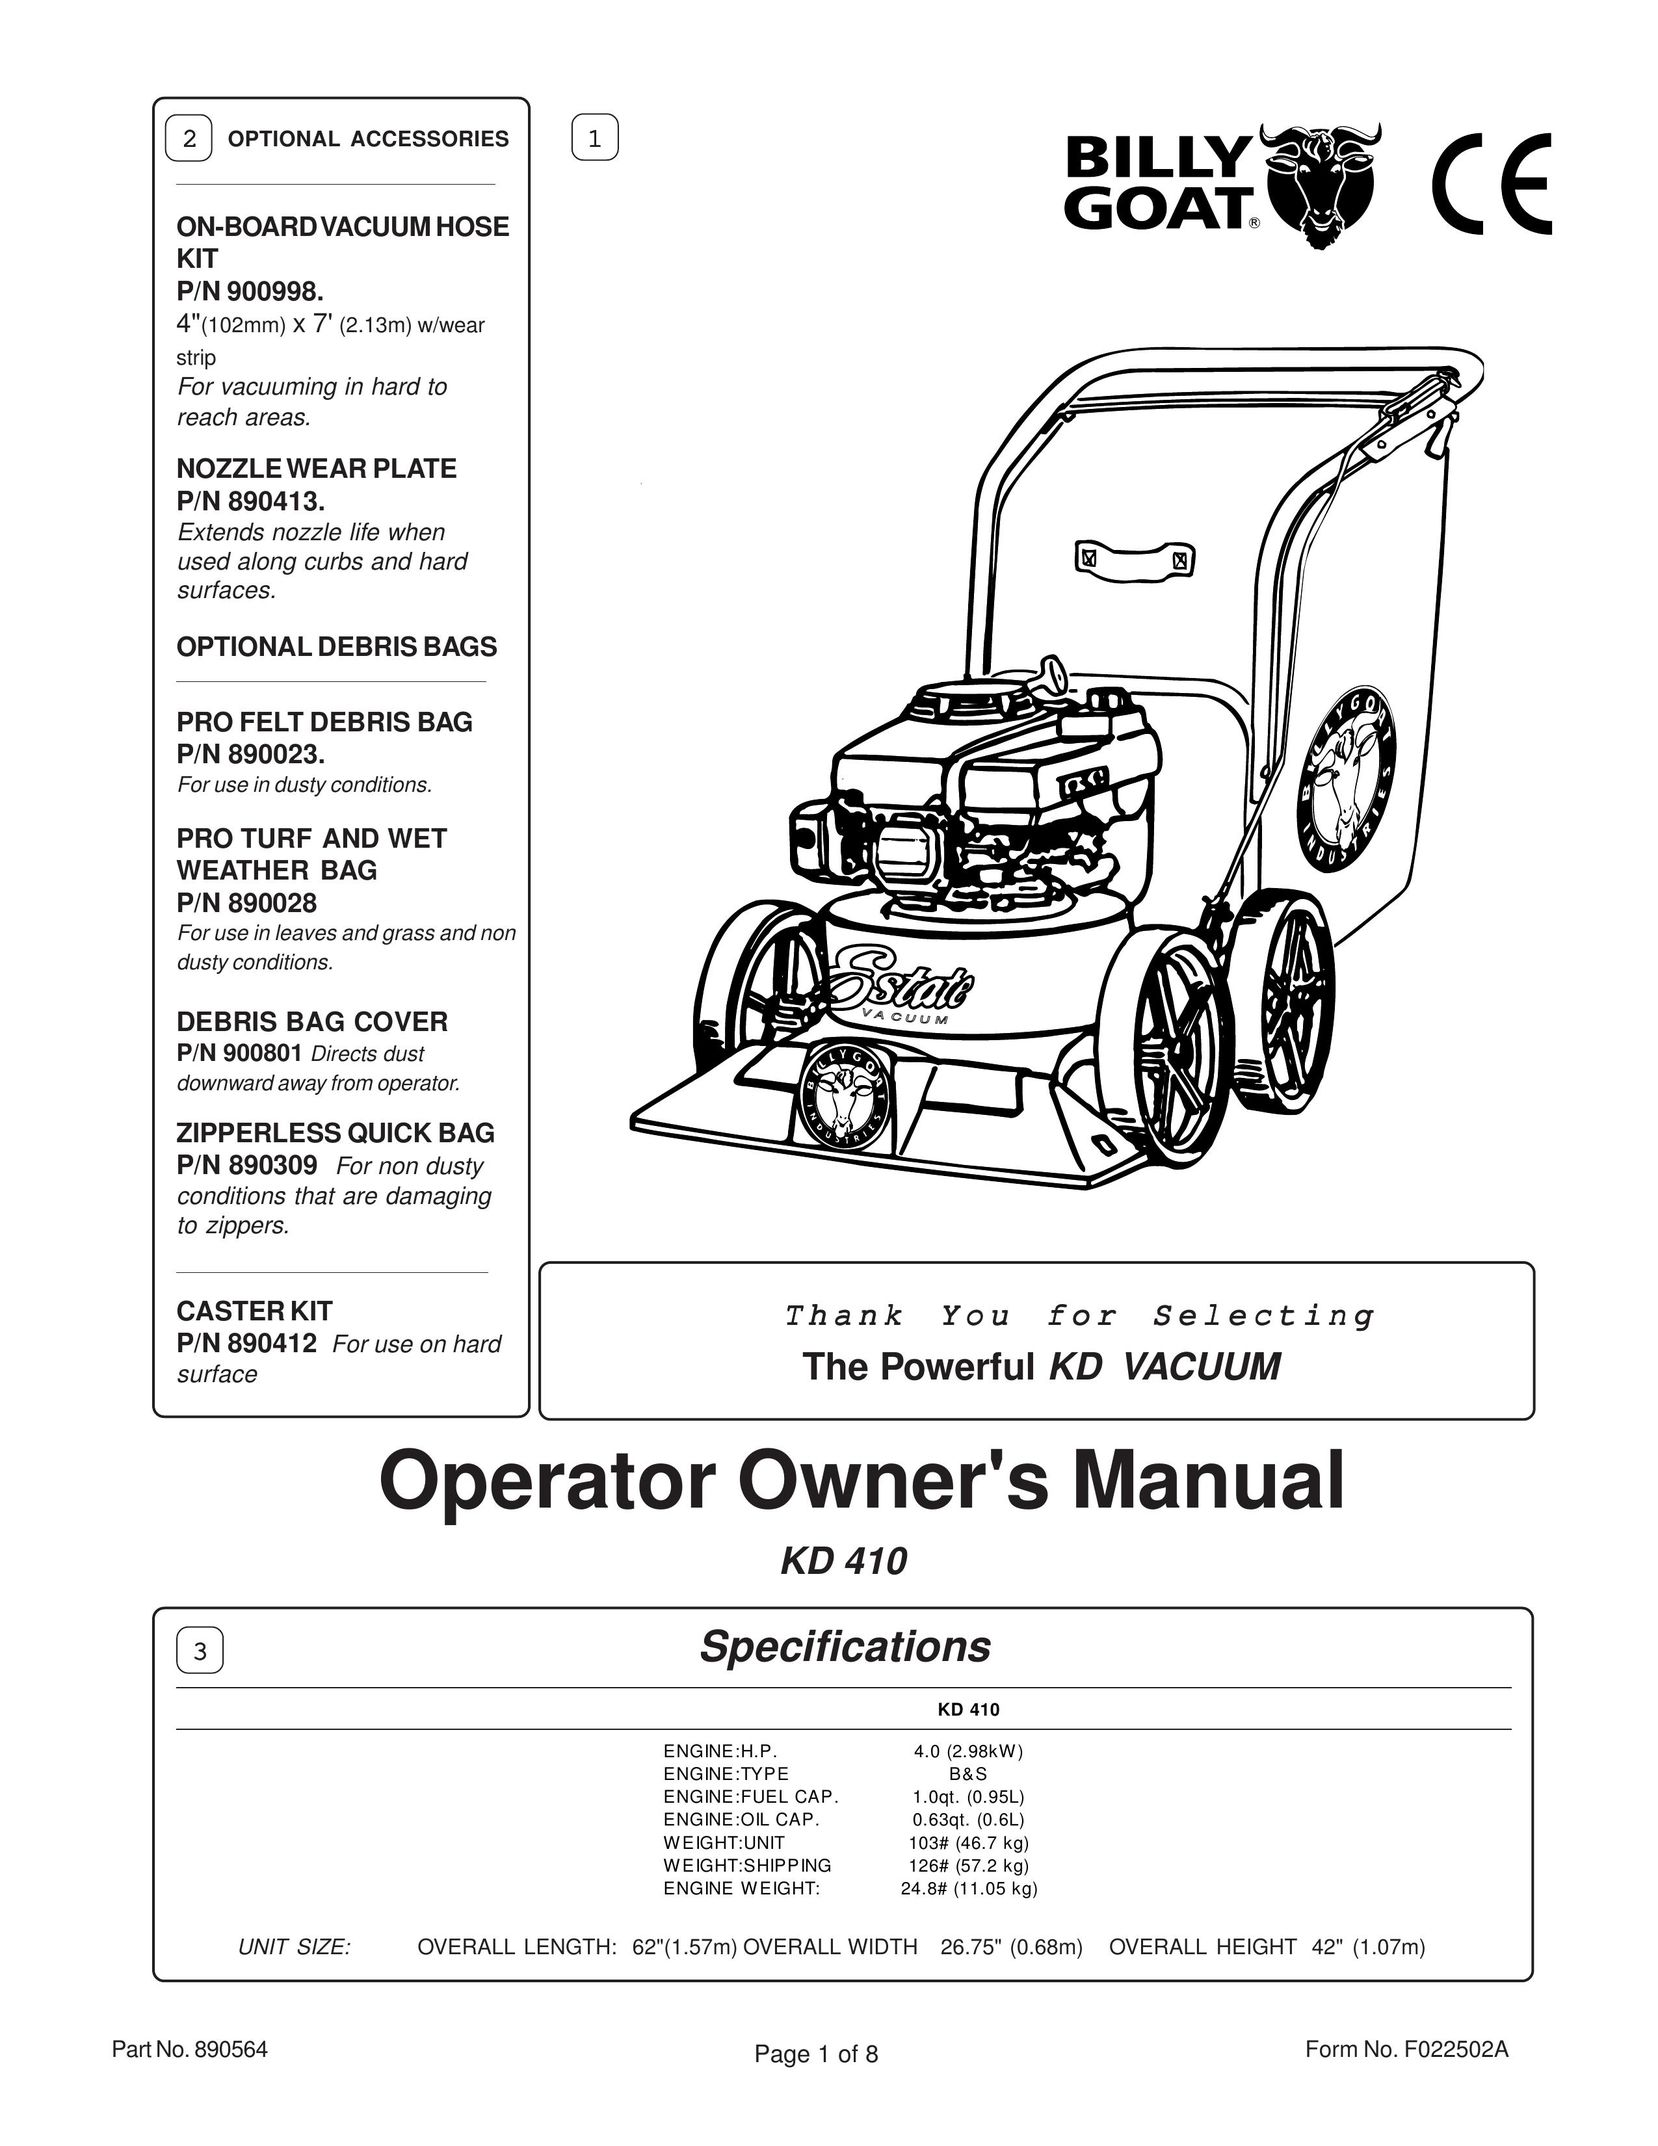 Billy Goat KD 410 Vacuum Cleaner User Manual